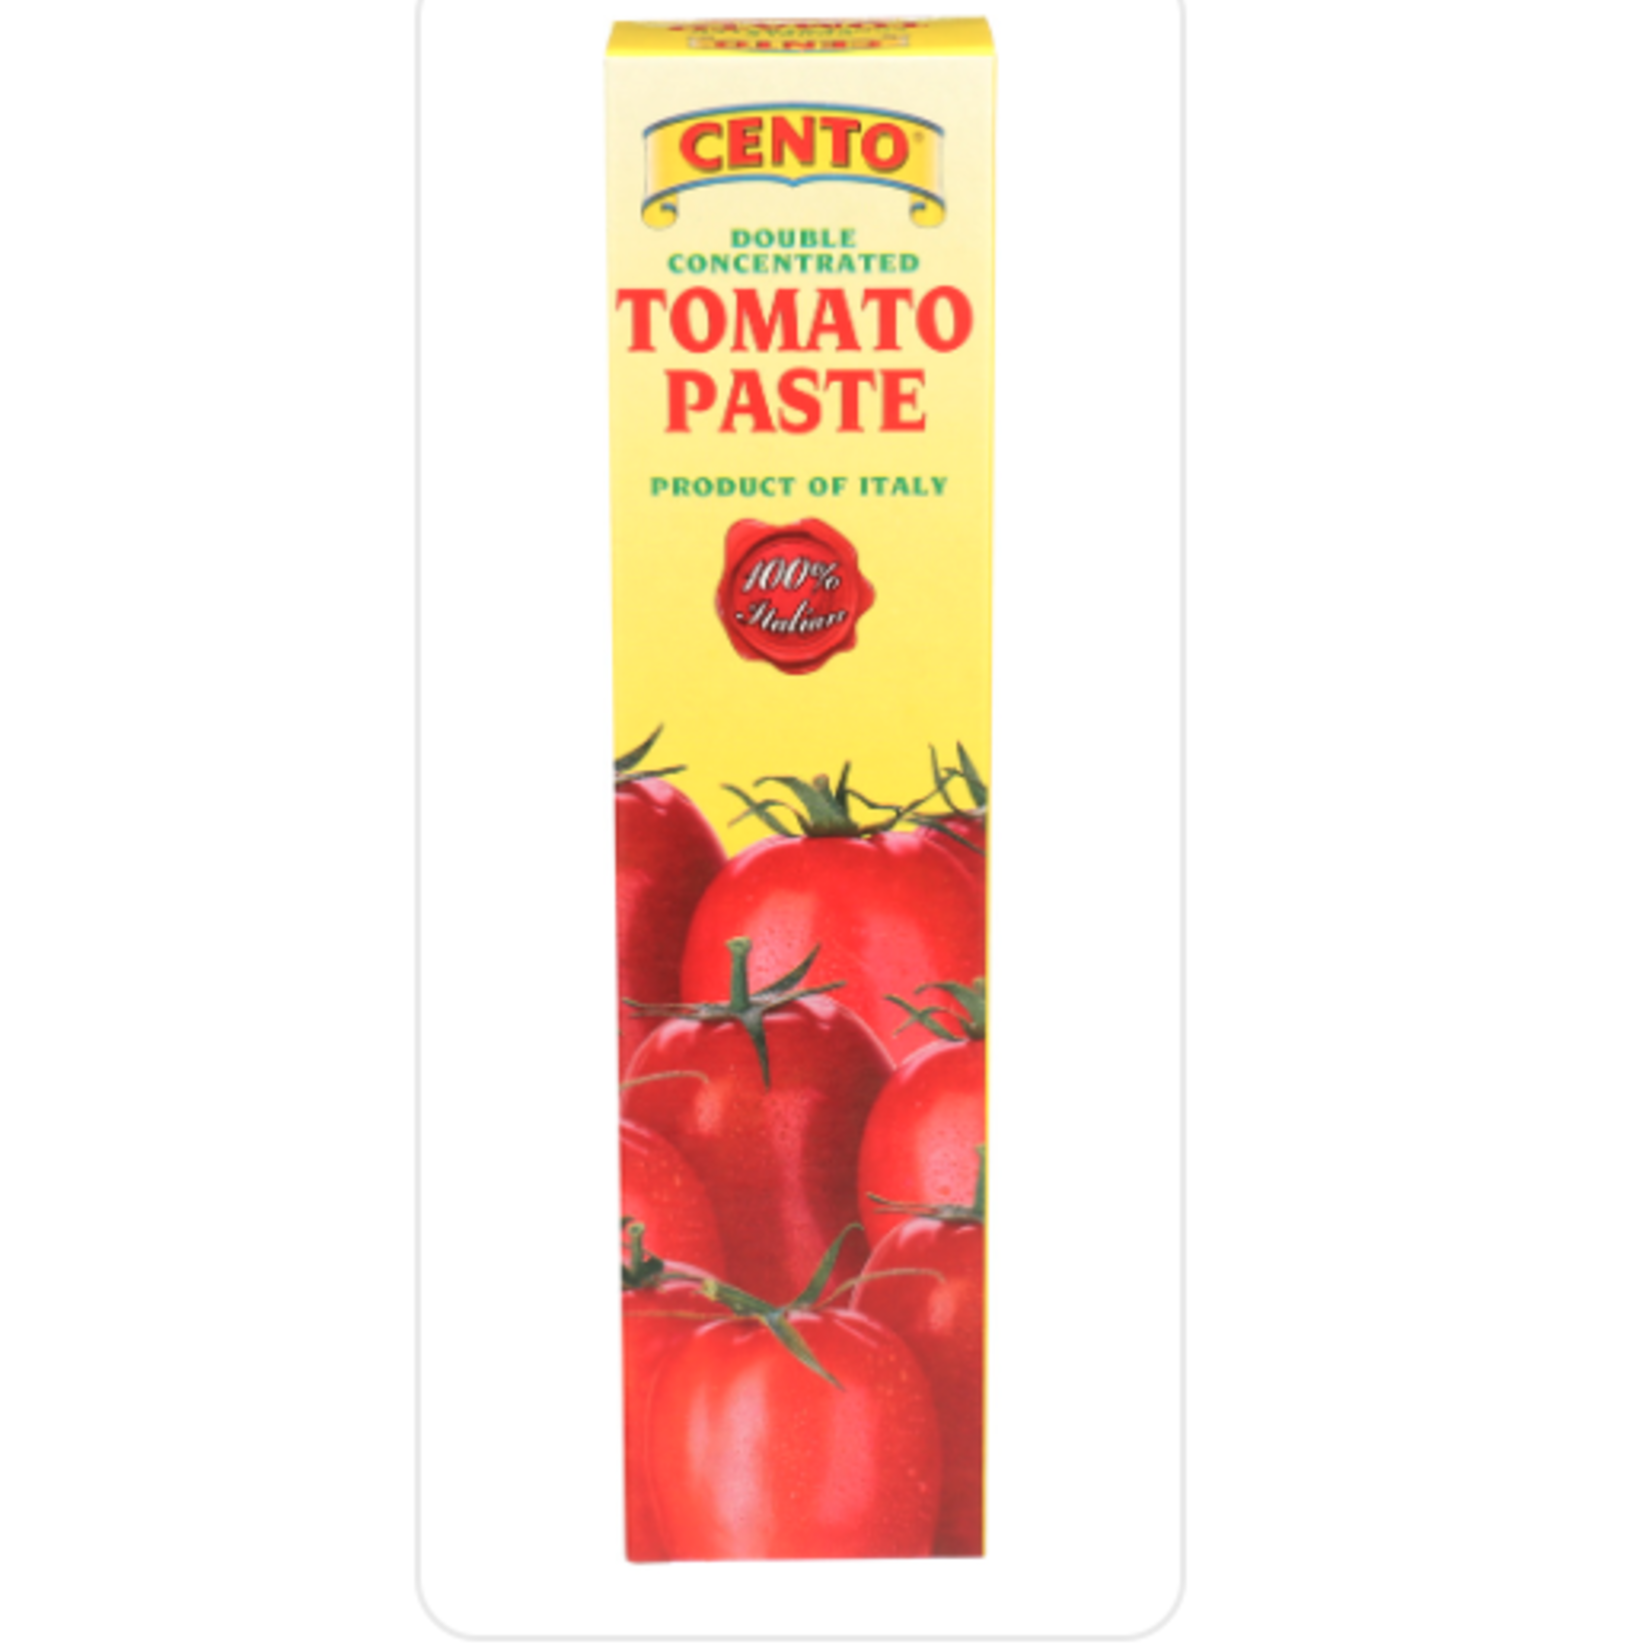 Cento Cento Double Concentrated Tomato Paste, 4.56 Oz